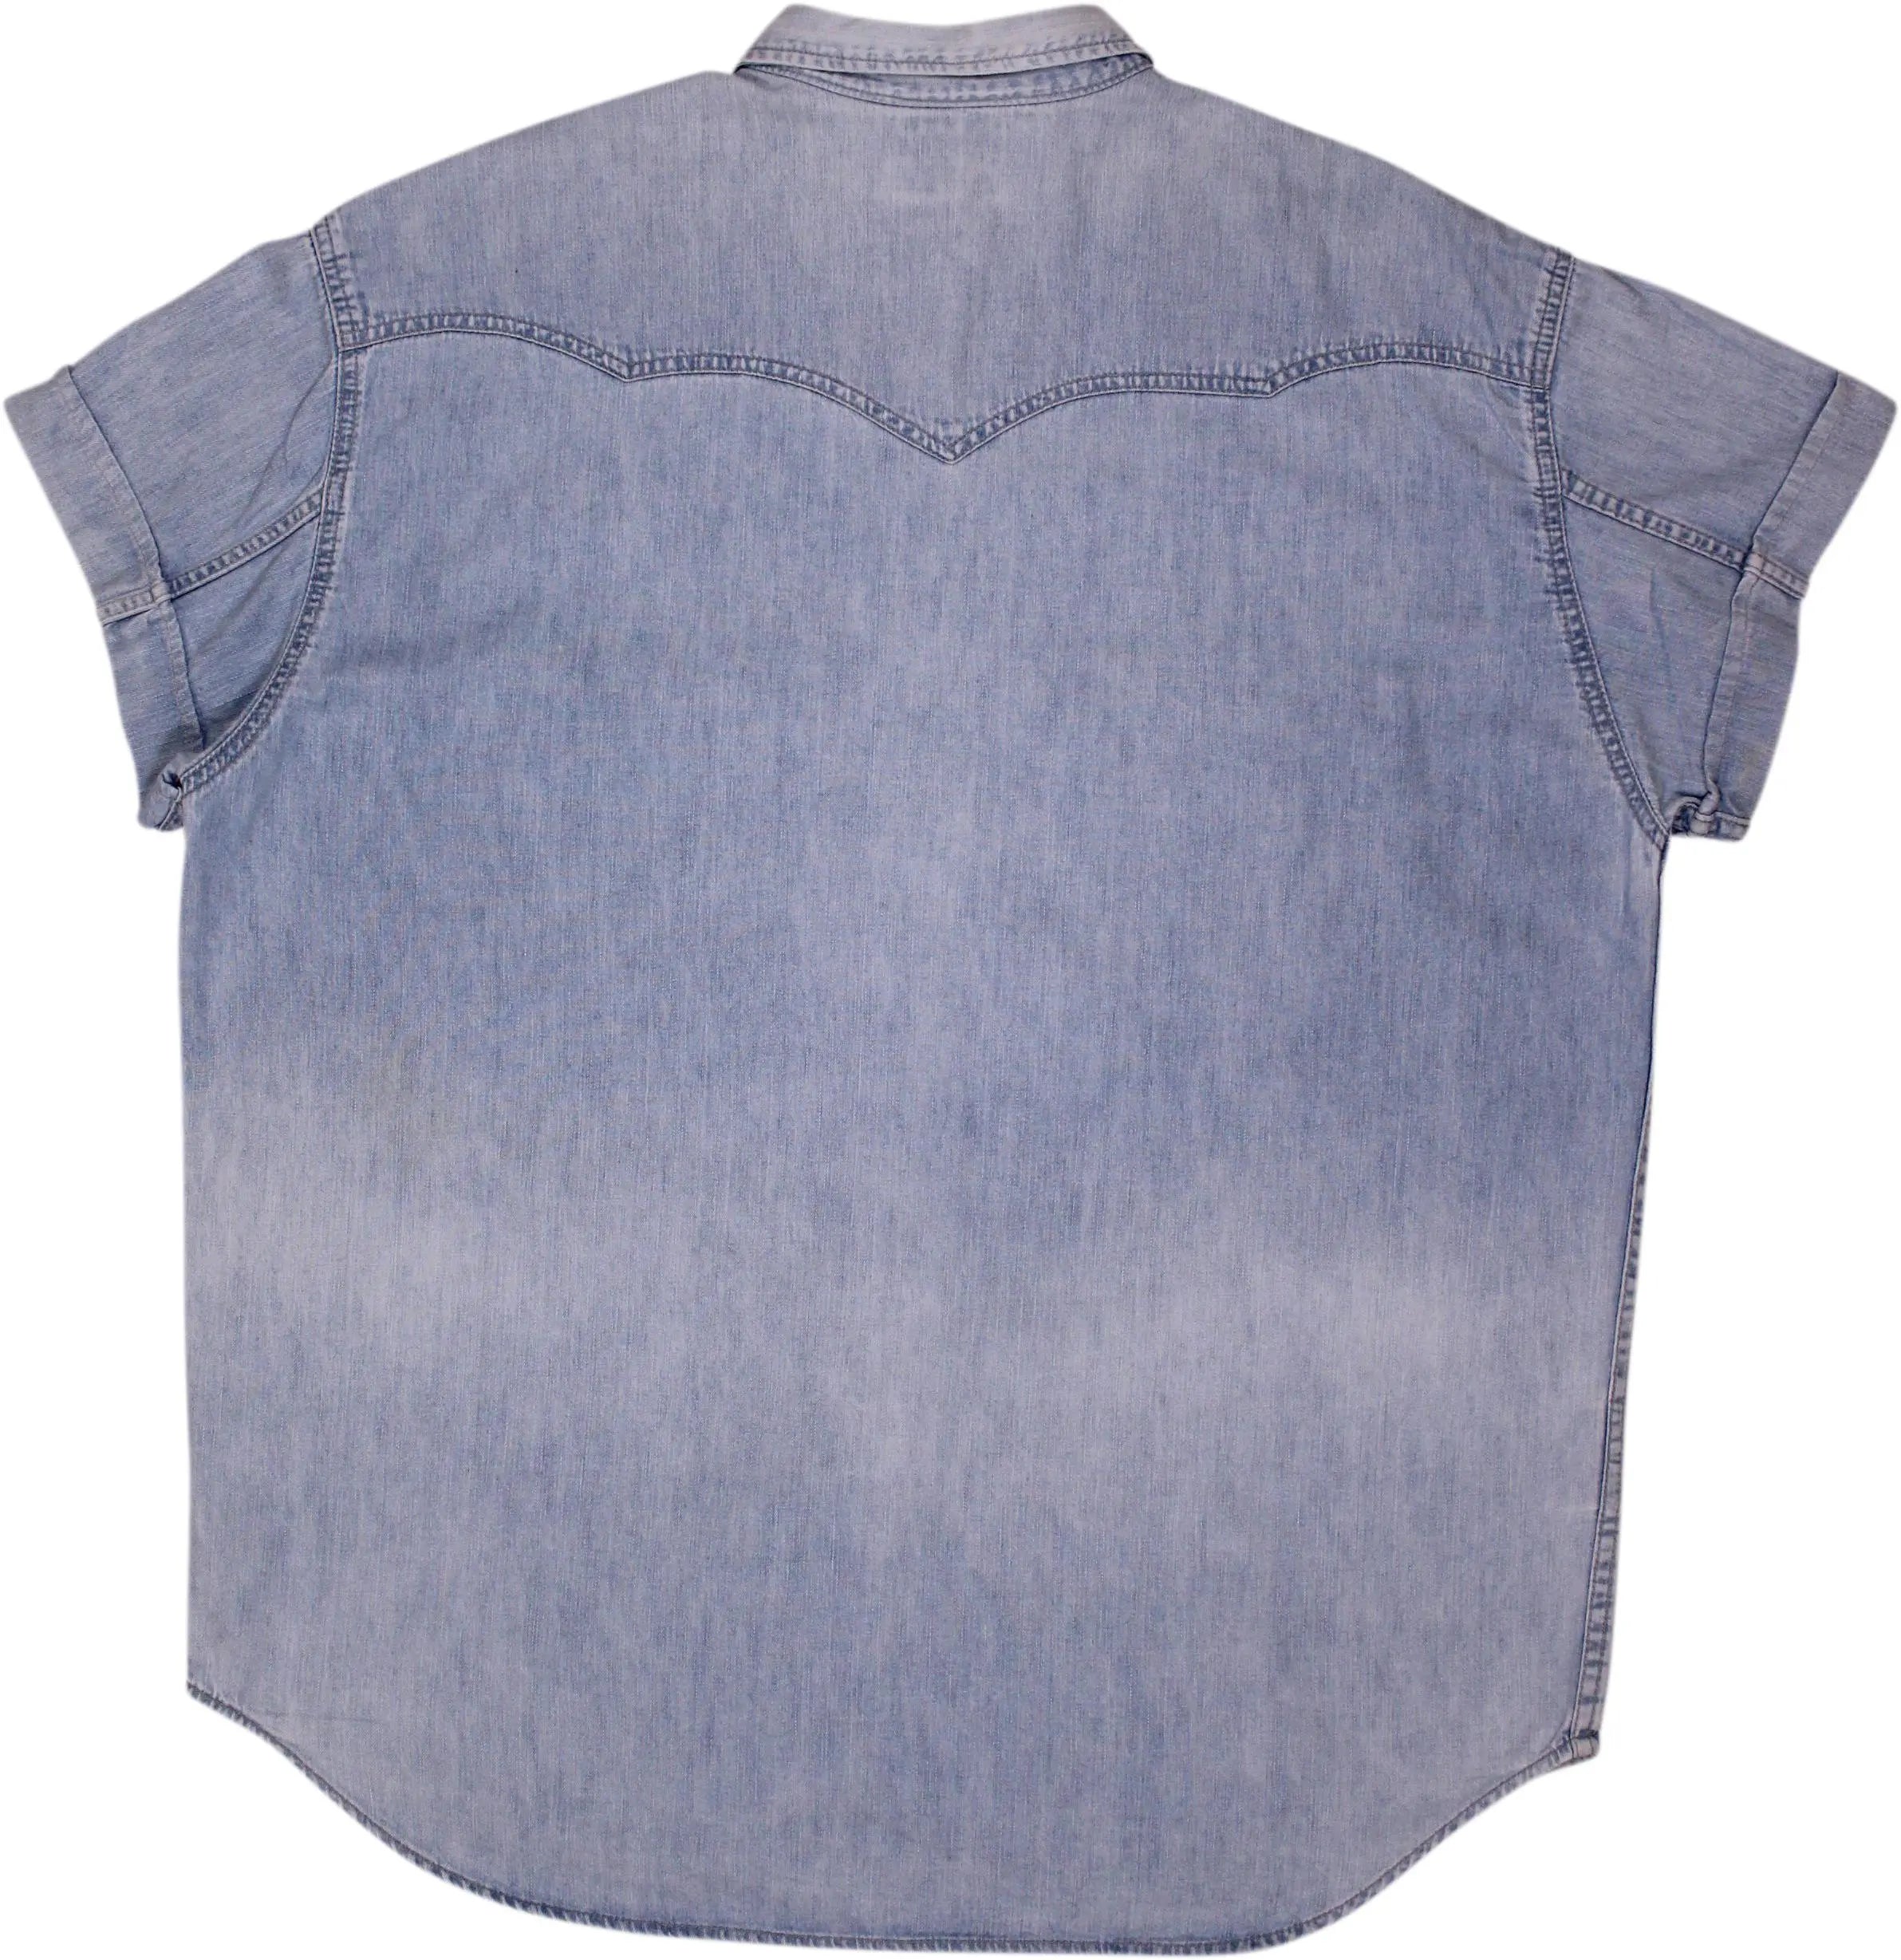 Levi's - Levi's Denim Short Sleeve Shirt- ThriftTale.com - Vintage and second handclothing